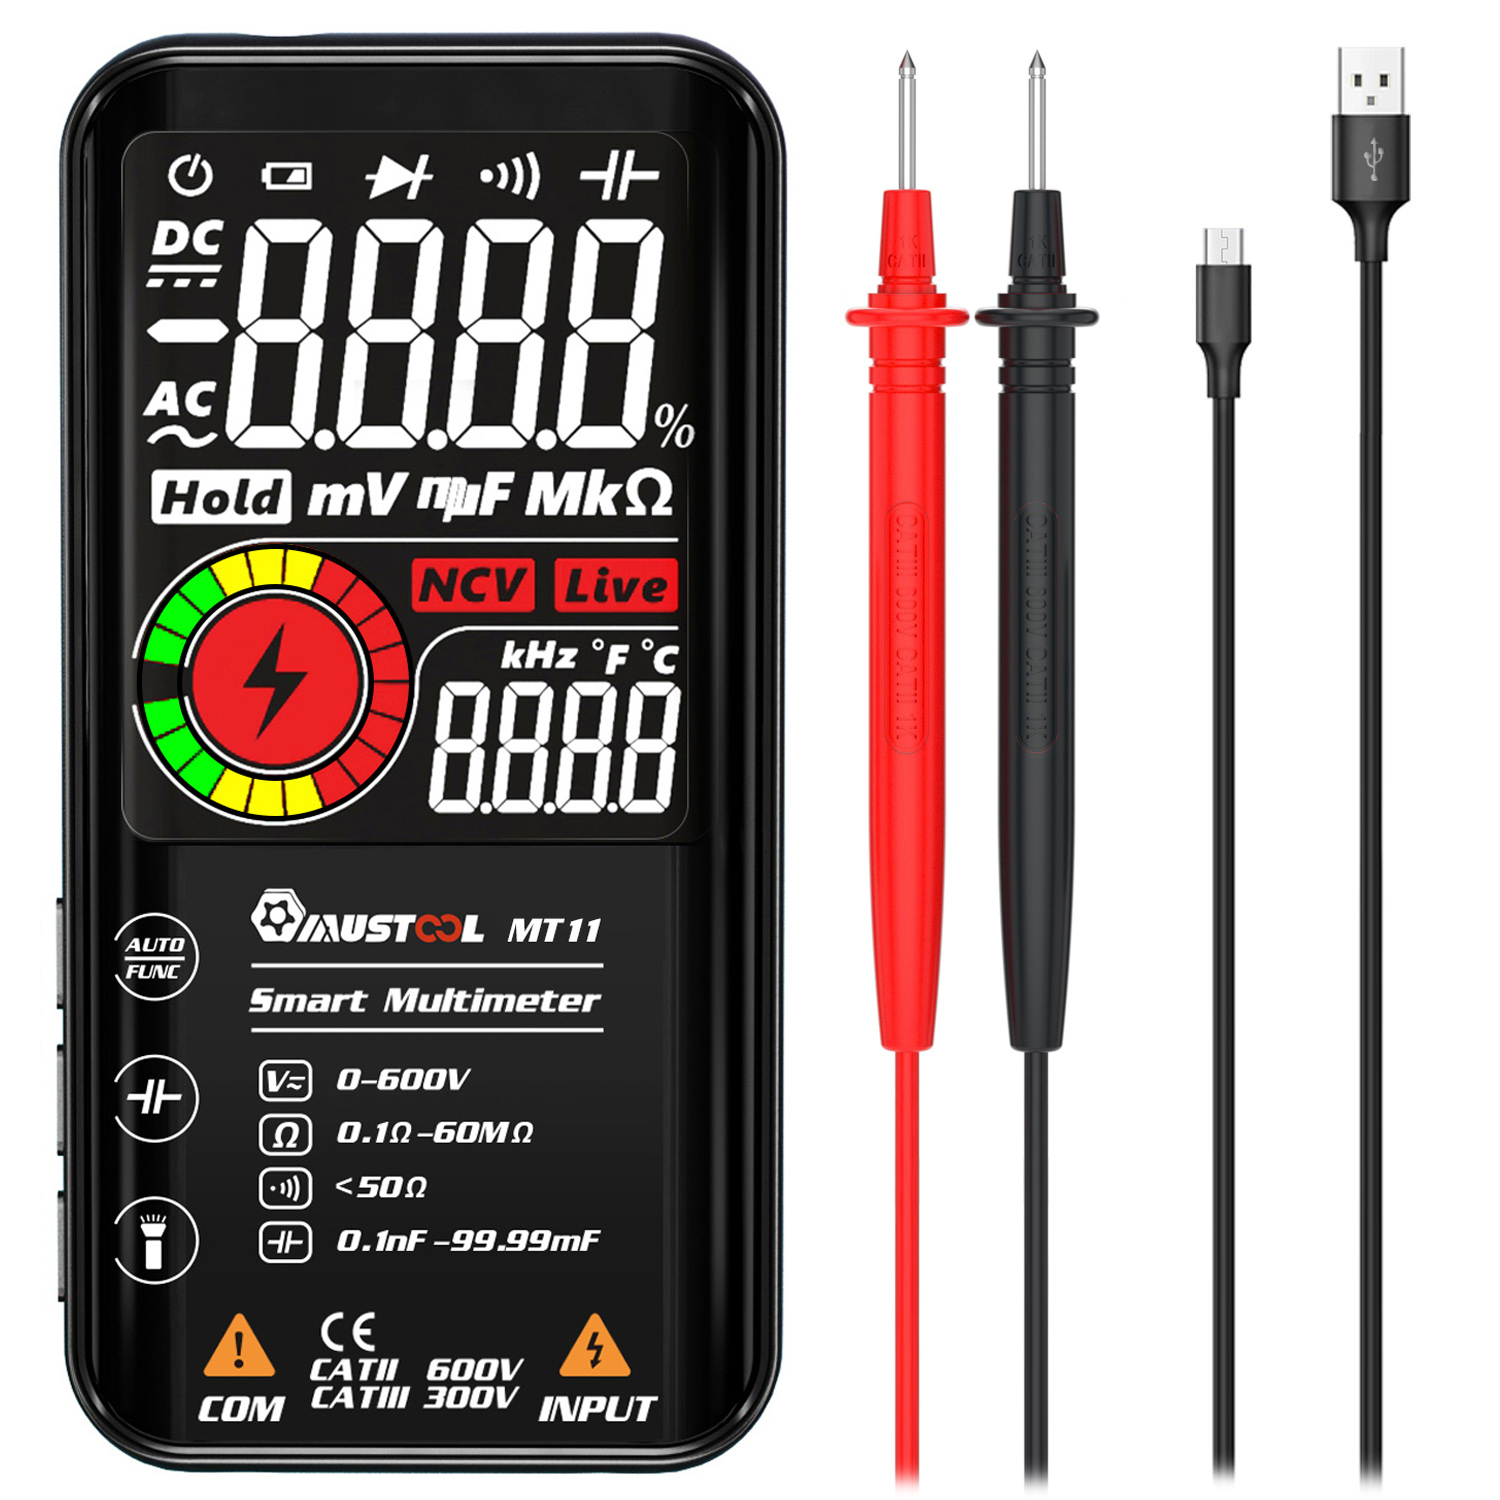 MUSTOOL-MT11MT11-Pro-Digital-Smart-9999-Counts-True-RMS-Multimeter-Color-LCD-Display-DC-AC-Voltage---1835524-9